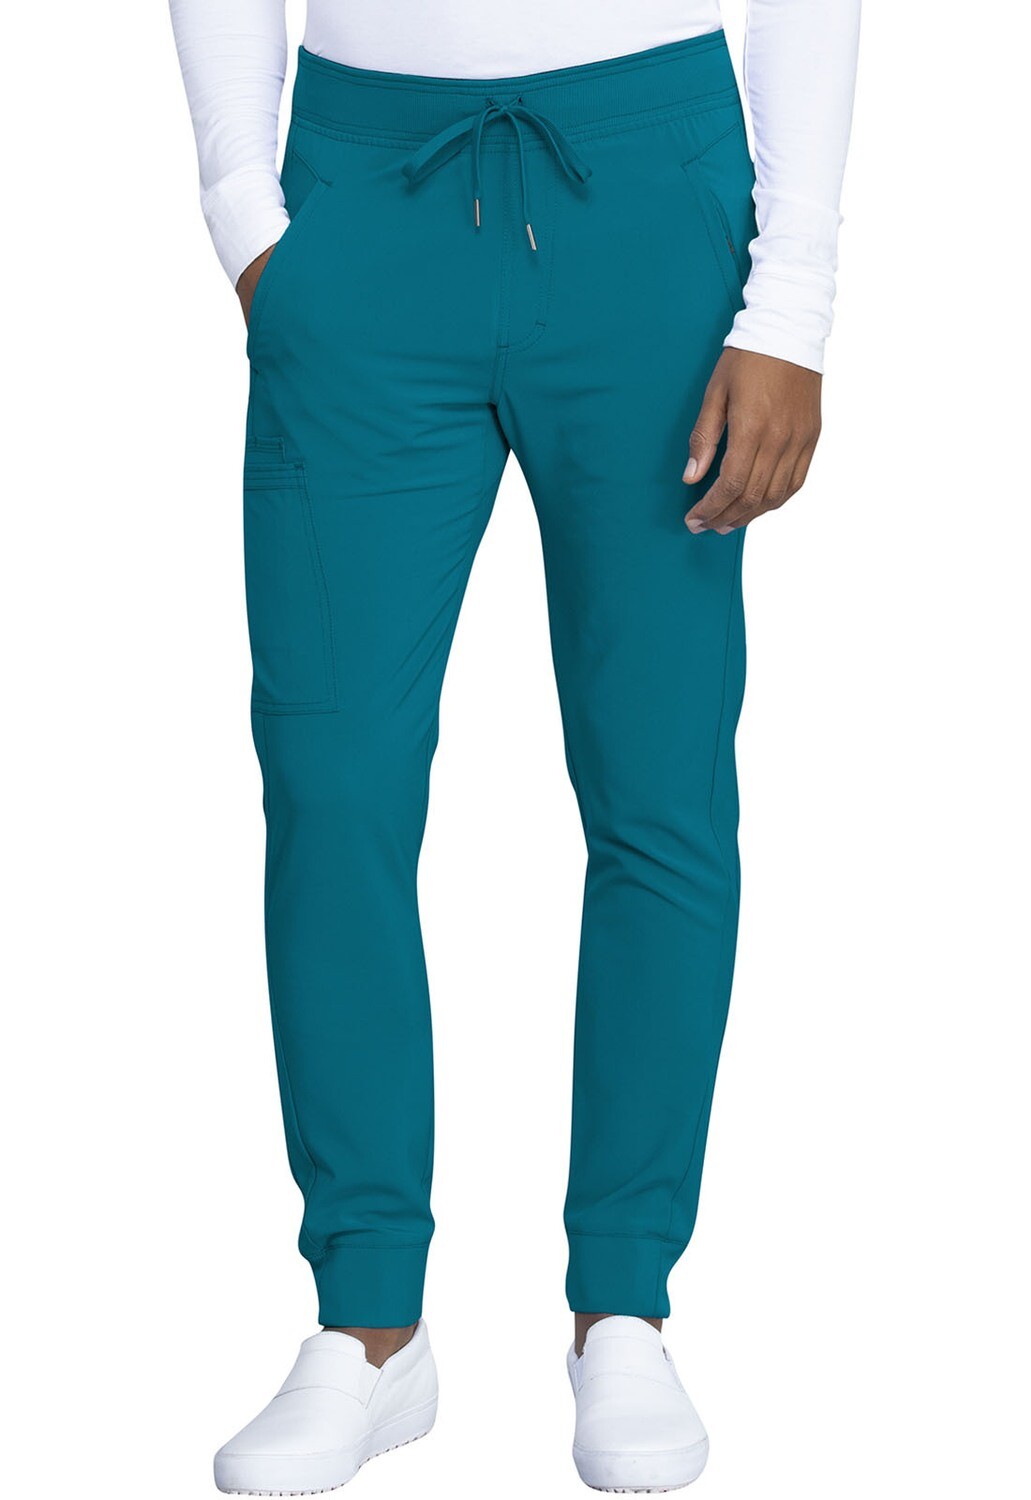 Pantalone CHEROKEE INFINITY CK004A Colore Caribbean Blue